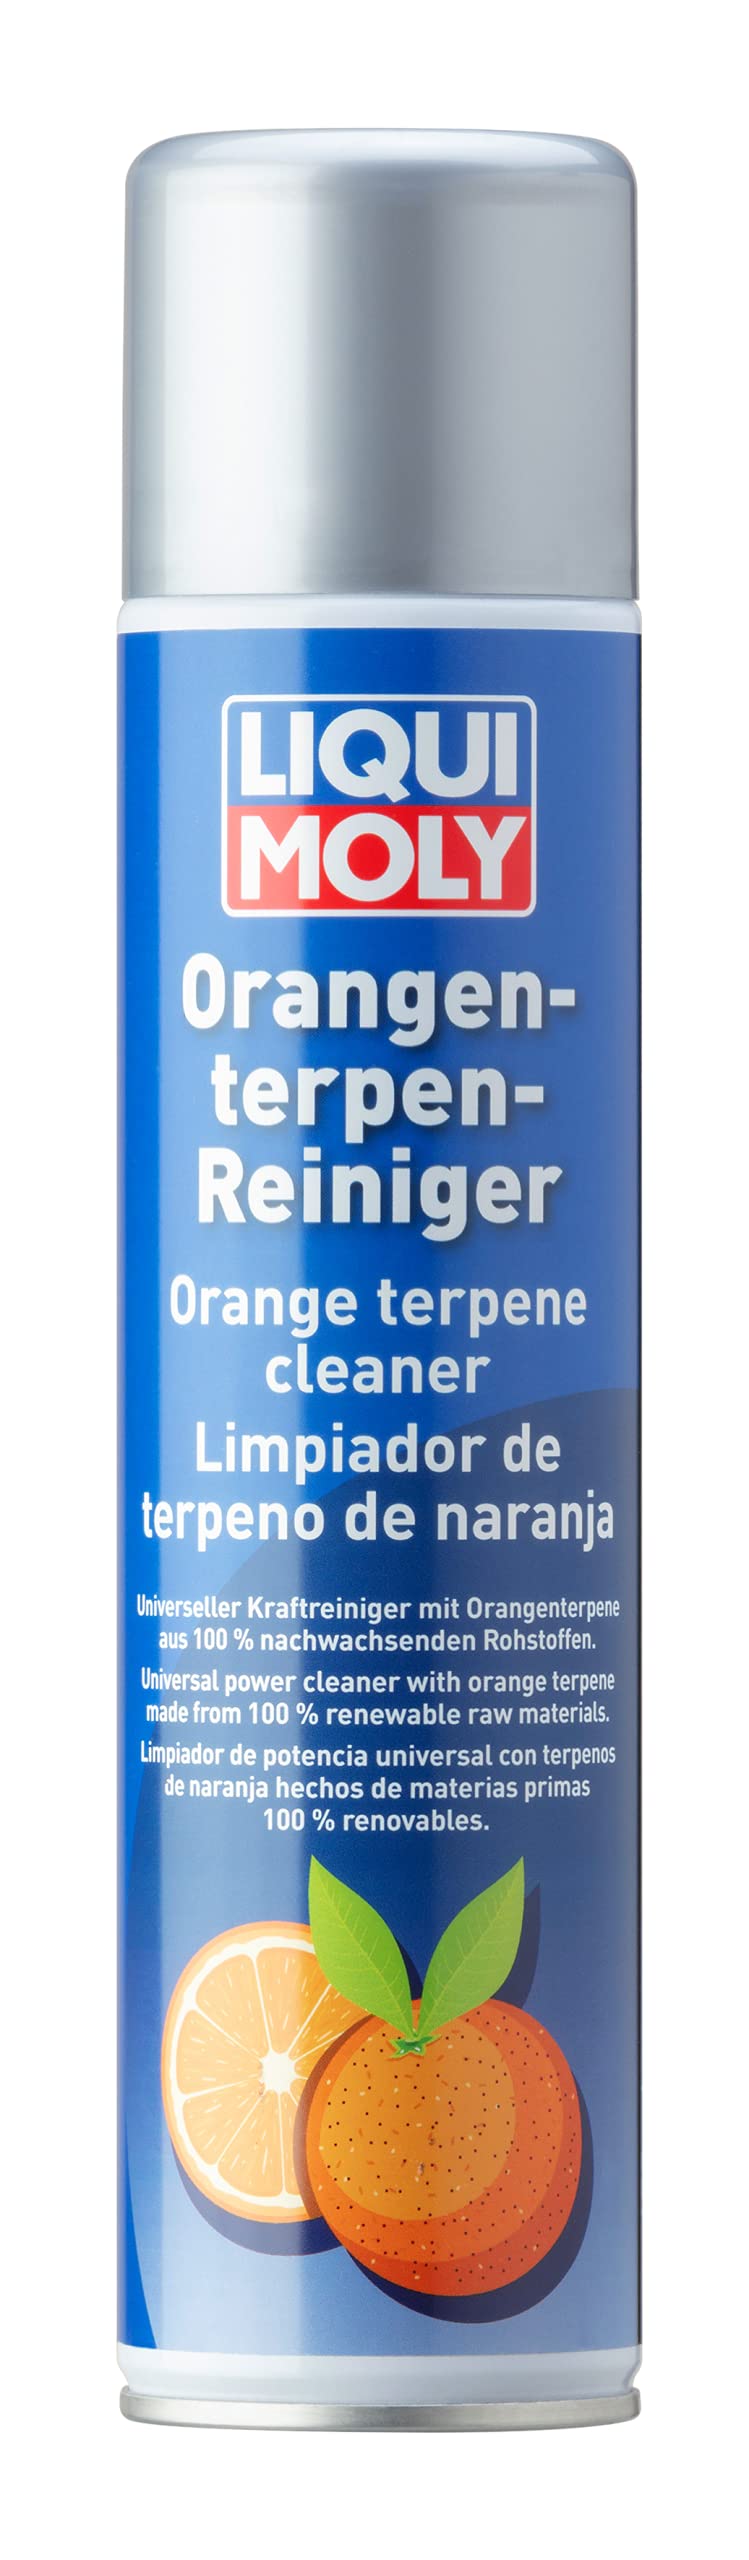 LIQUI MOLY Orangenterpen-Reiniger | 400 ml | Autopflege | Lackpflege | Art.-Nr.: 21467 von Liqui Moly